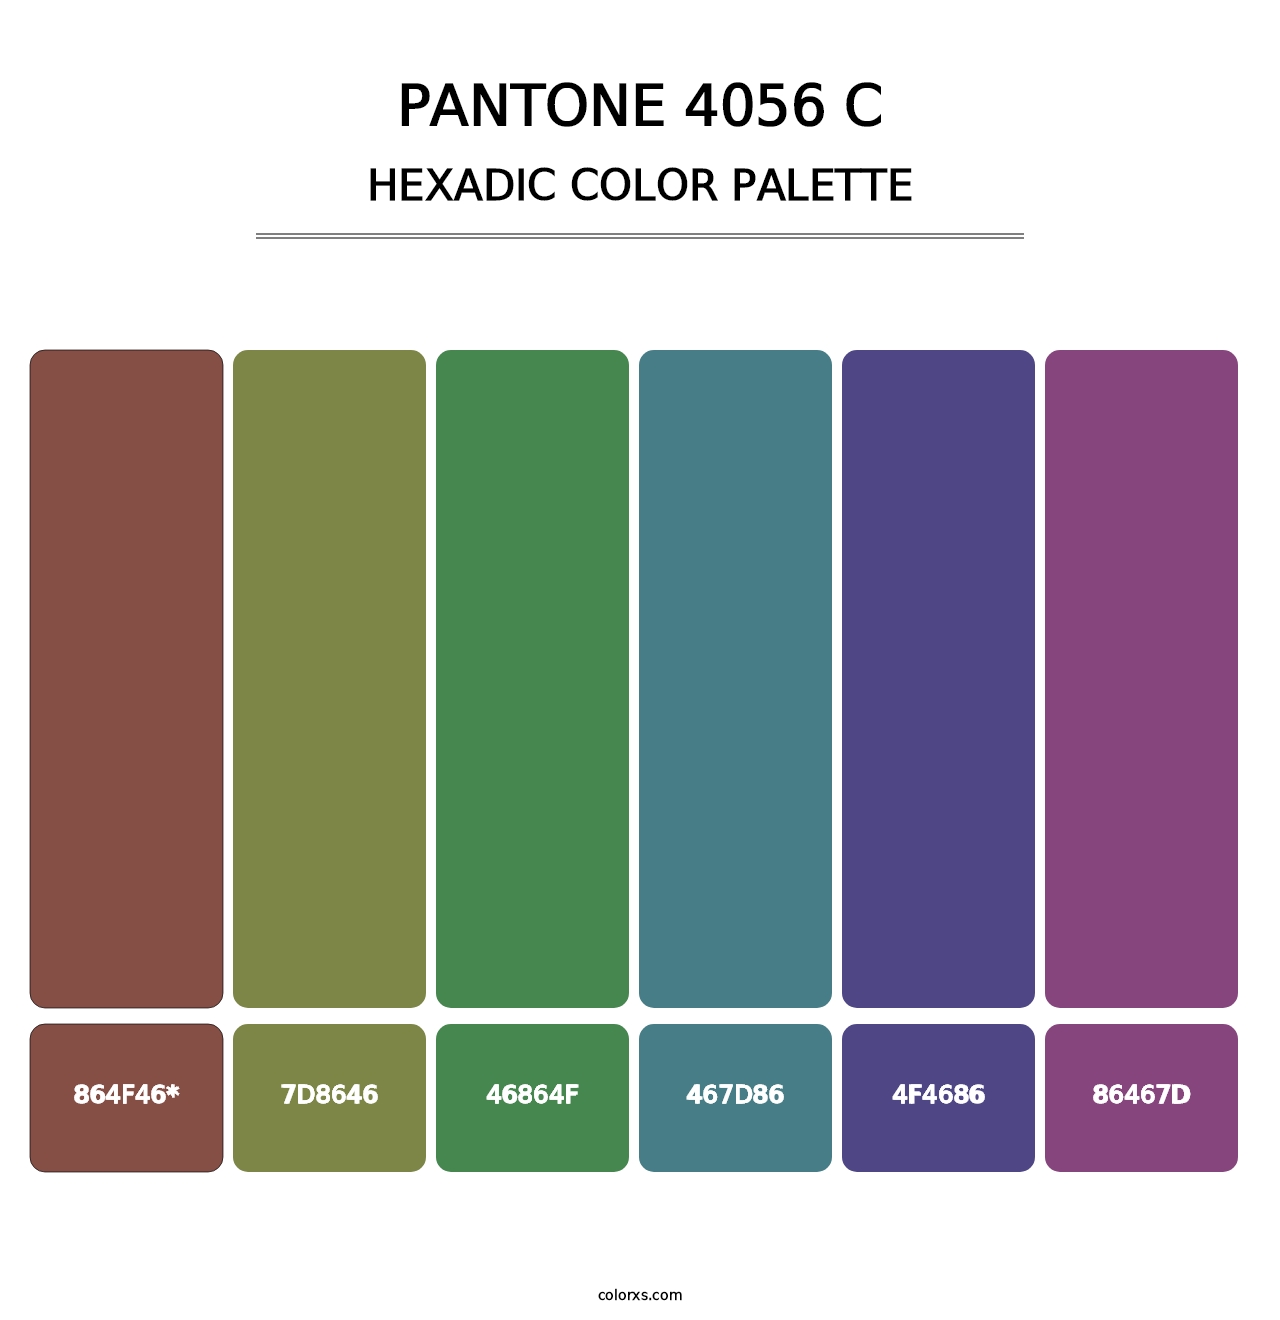 PANTONE 4056 C - Hexadic Color Palette